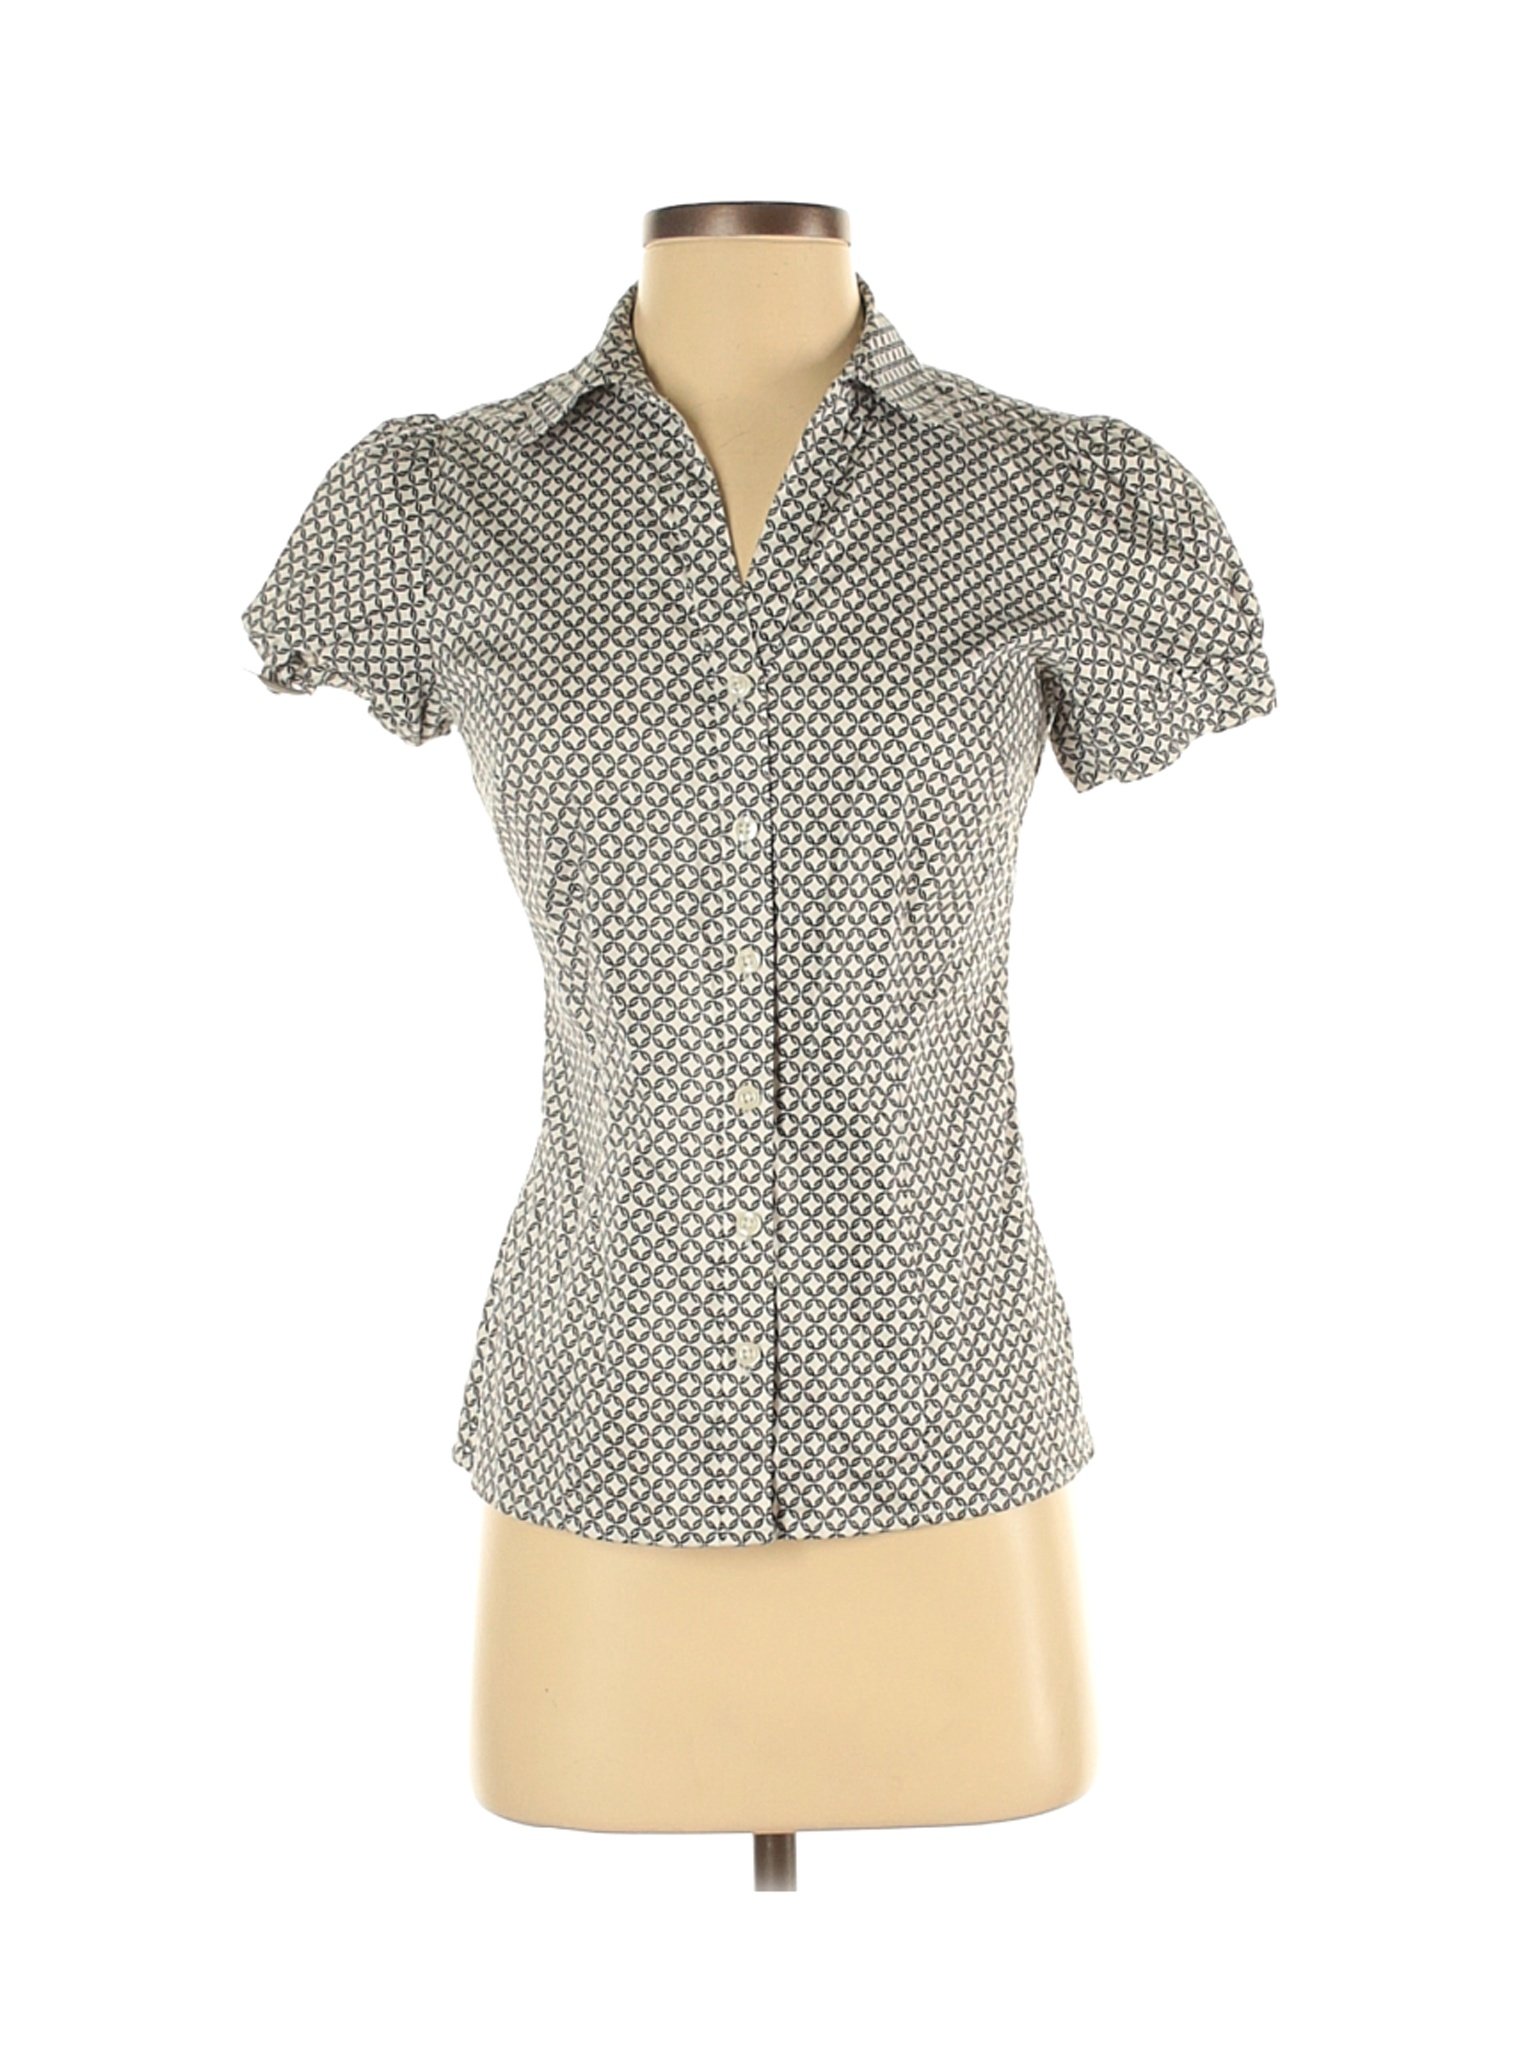 Apt. 9 Women Black Short Sleeve Button-Down Shirt S | eBay